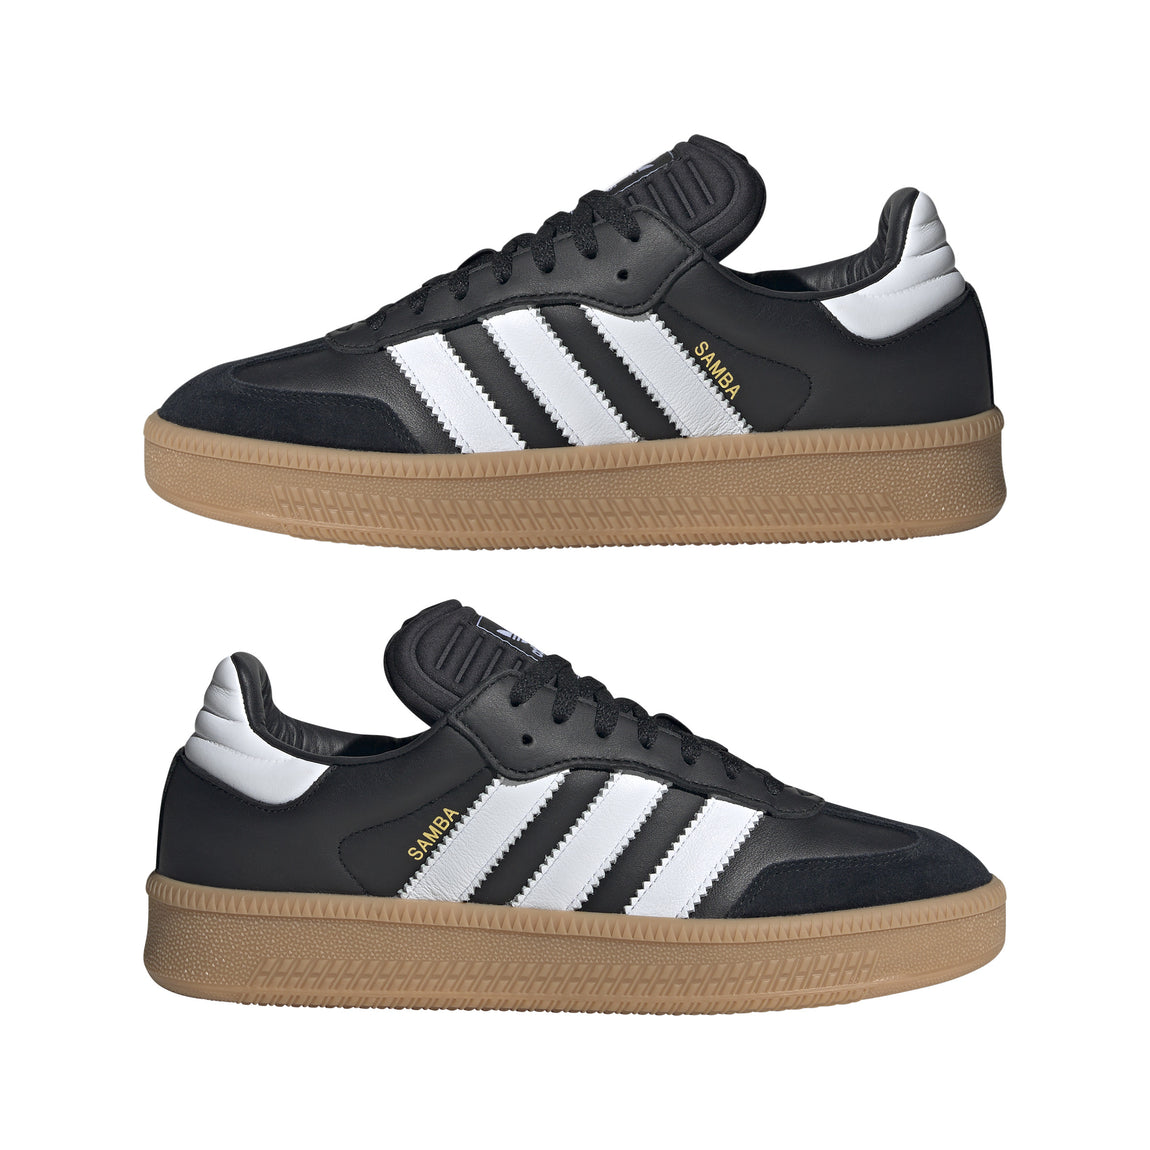 Adidas Samba XLG (Core Black/Footwear White/Gum3) - Adidas Samba XLG (Core Black/Footwear White/Gum3) - 